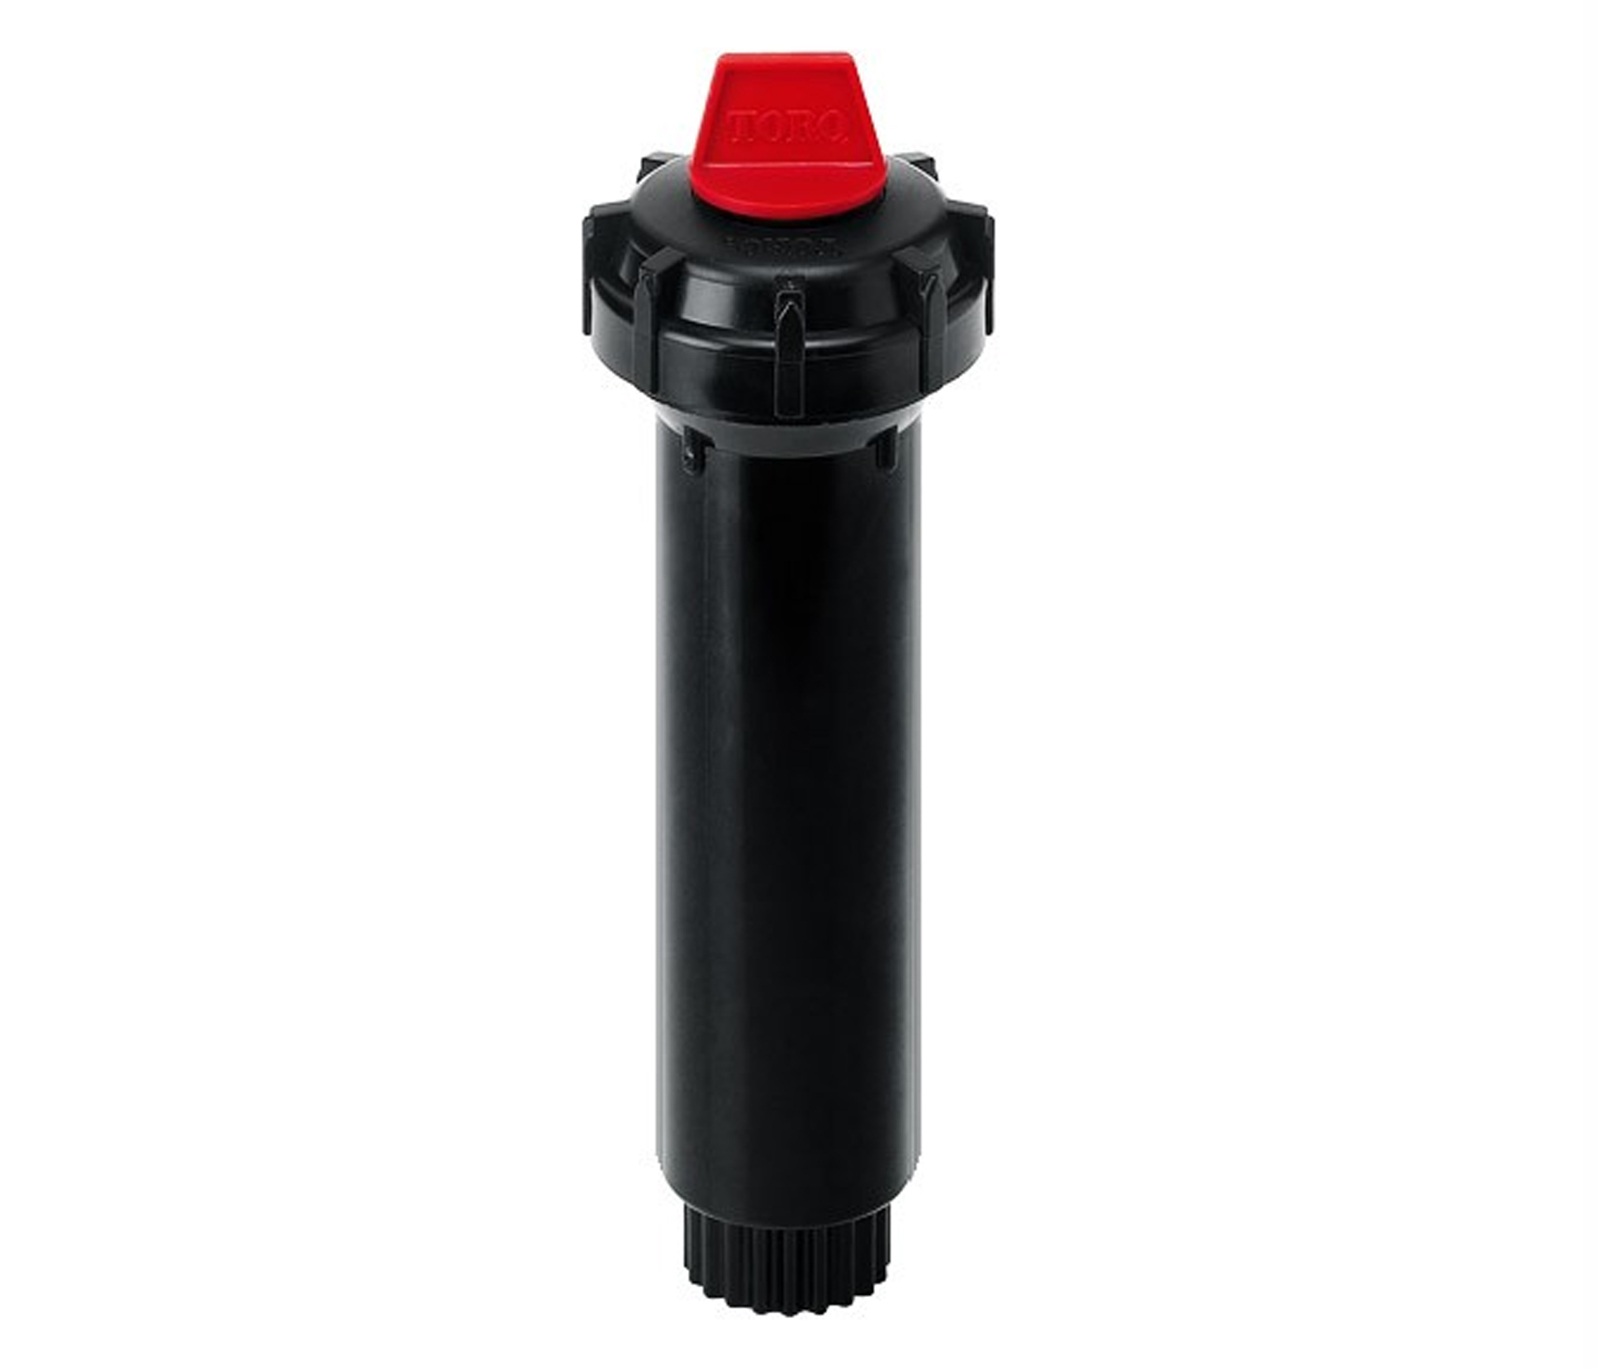 Toro 53730 Adjustable Underground Sprinkler Nozzle 15-Foot Spray 